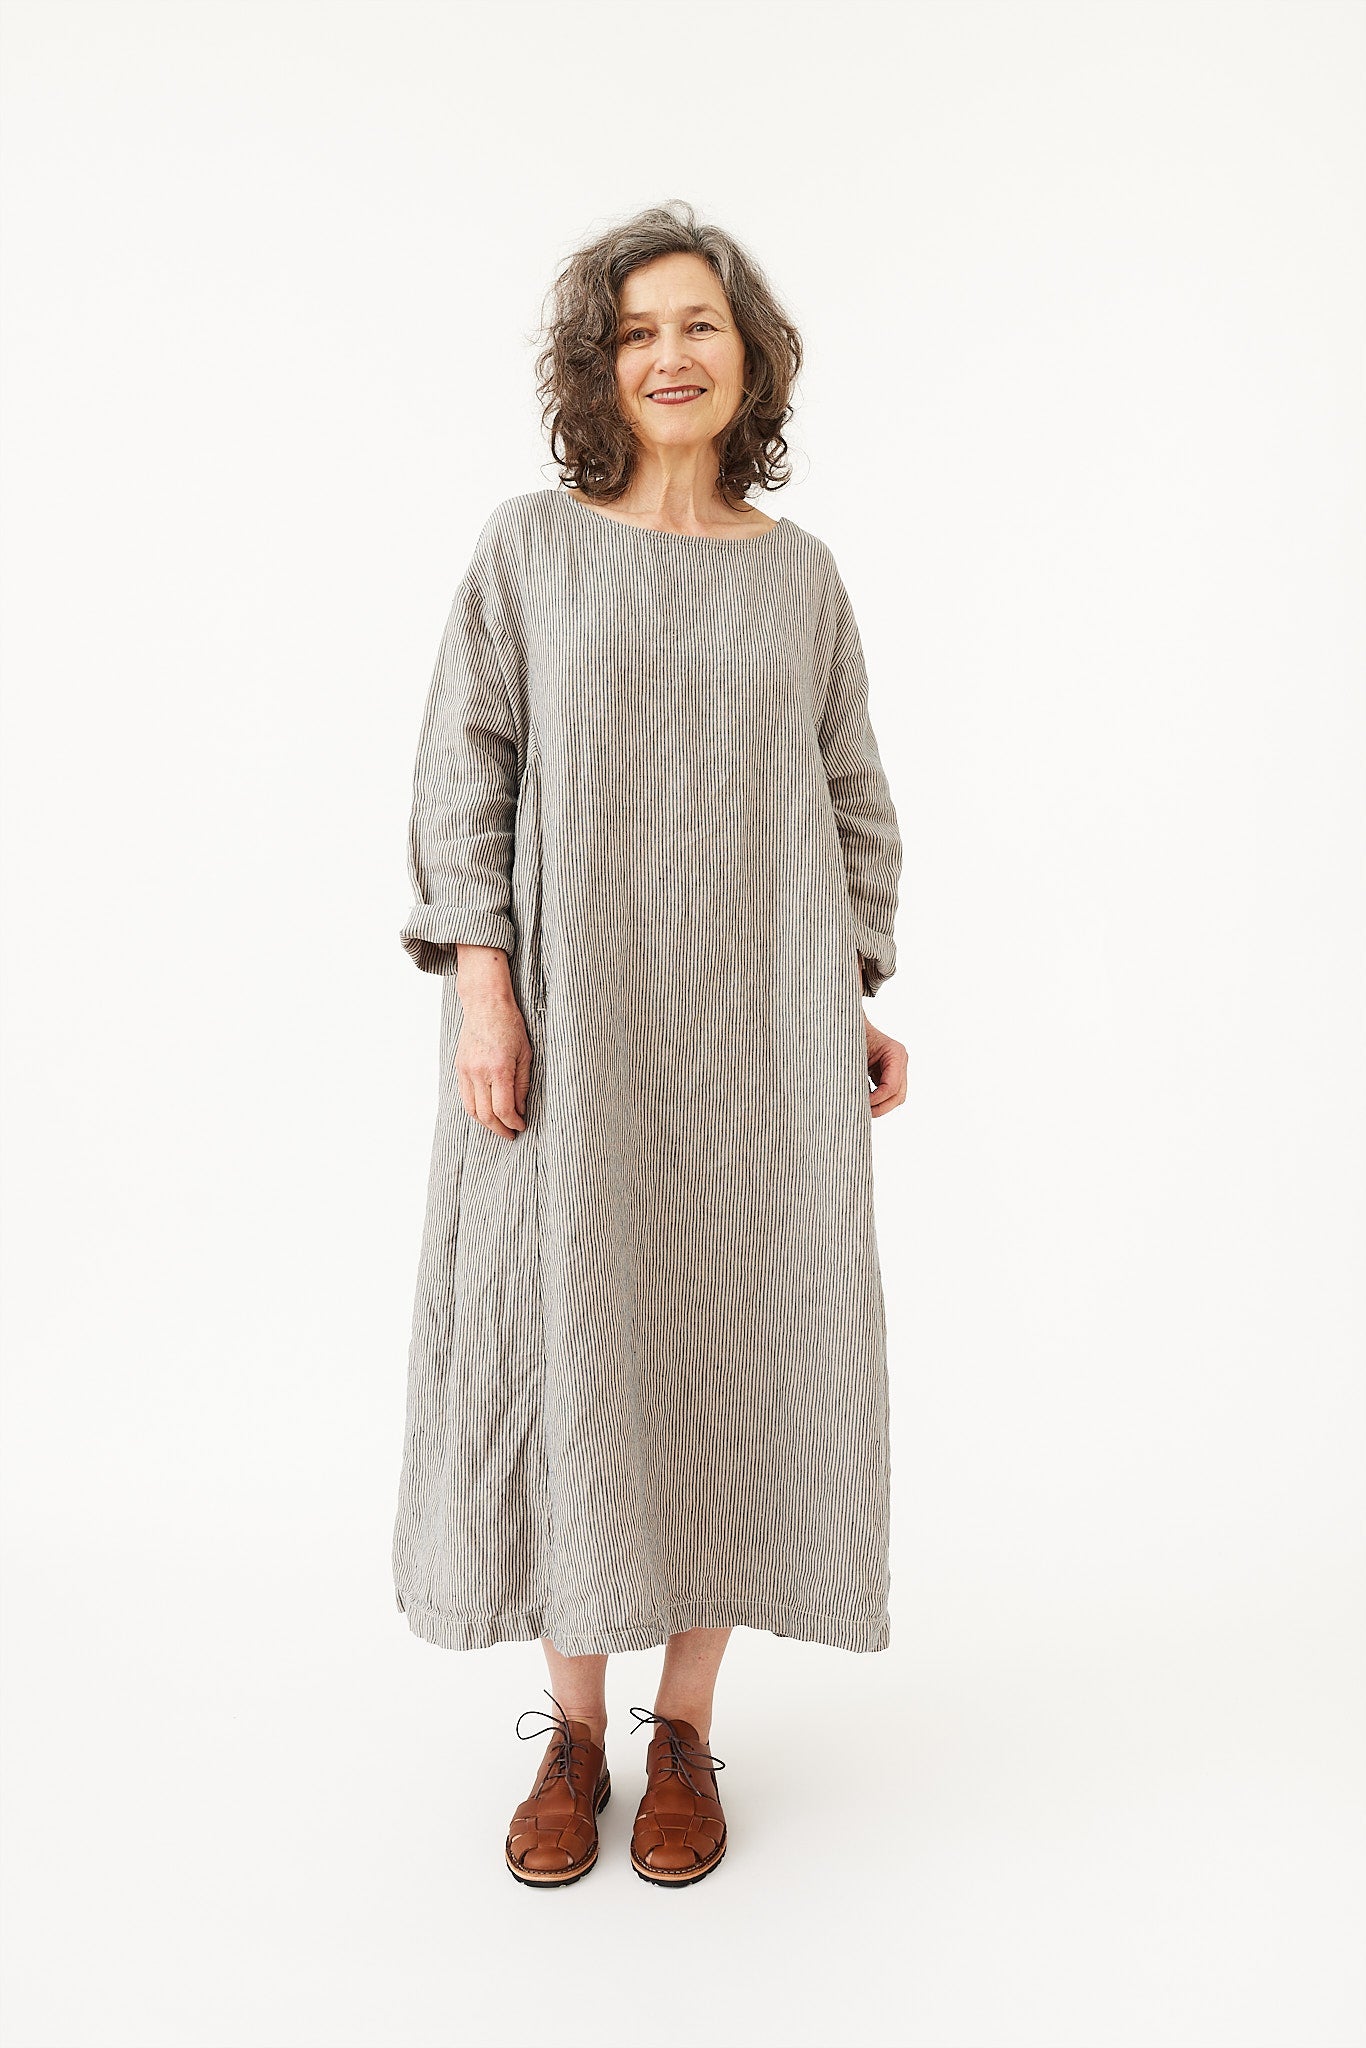 Olive Dress - Bengal Stripe Linen